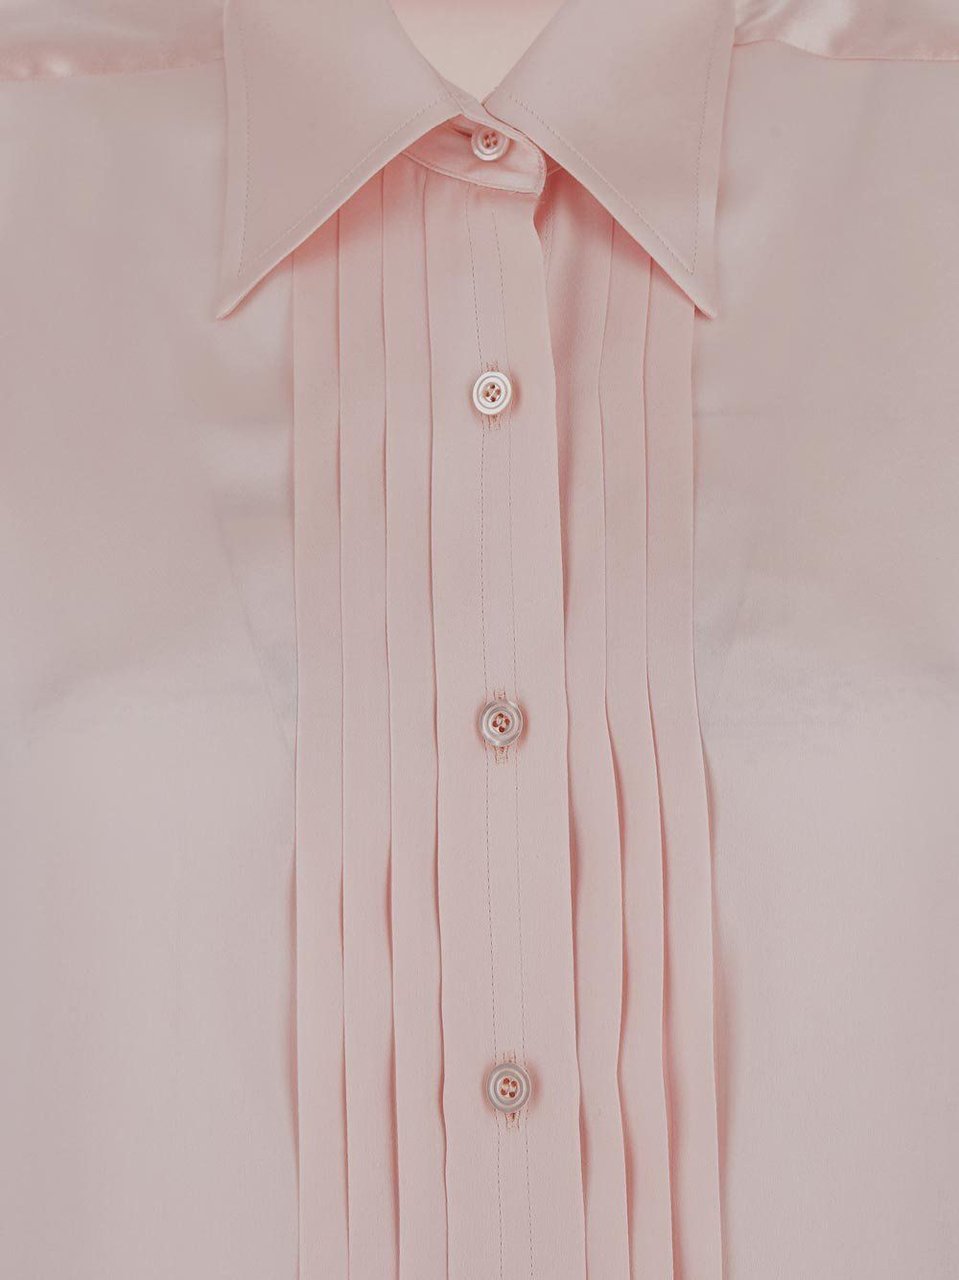 Tom Ford Silk Shirt Roze